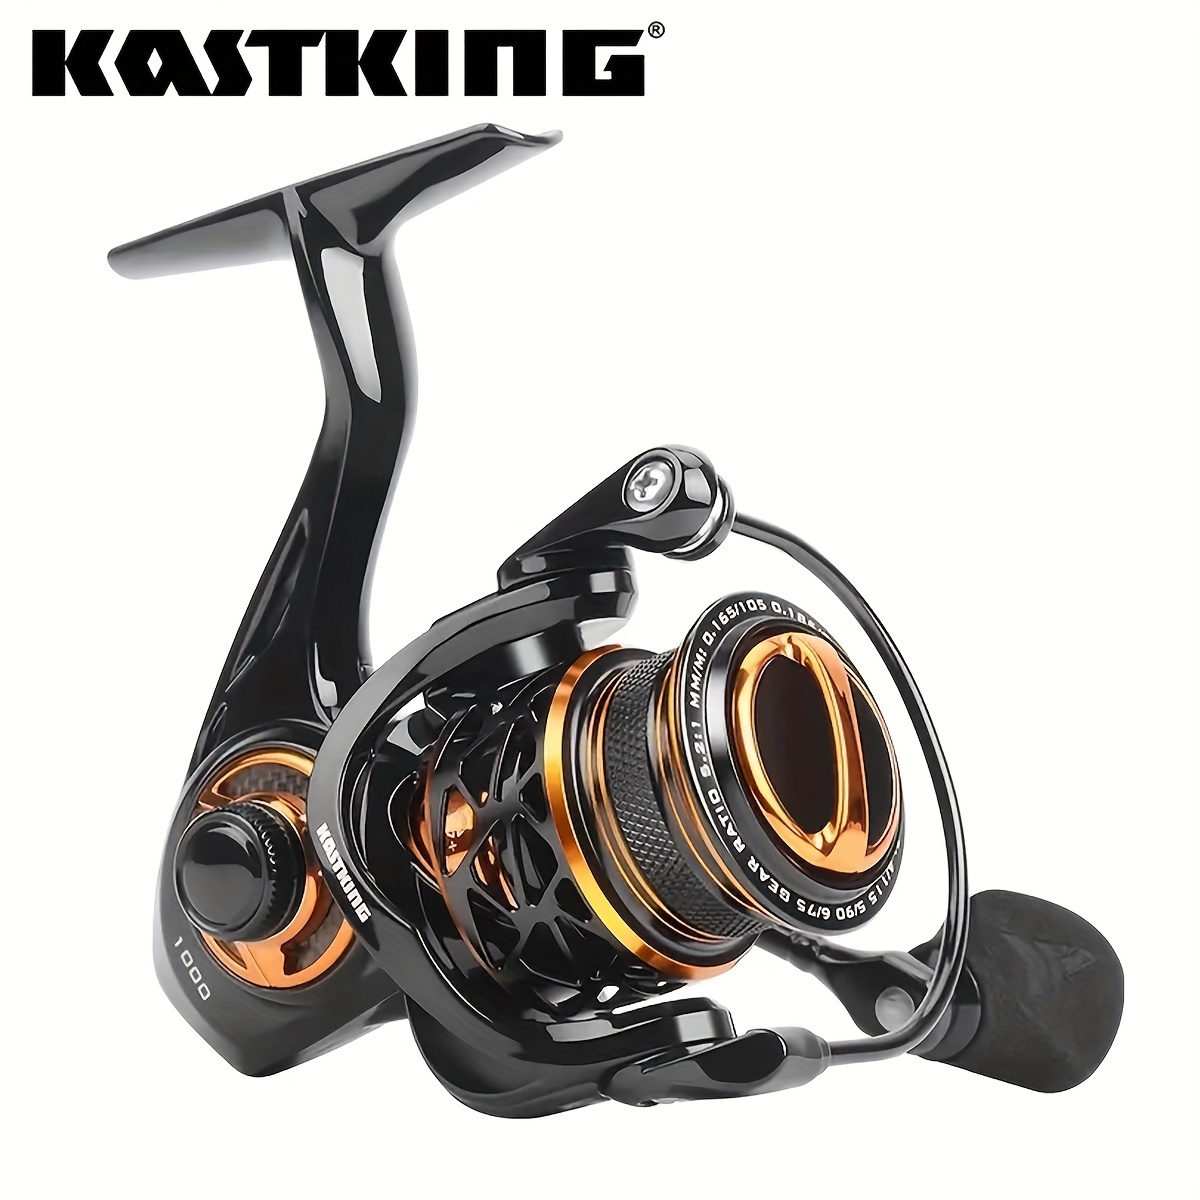  KastKing Valiant Eagle Spinning Reels, Black Gold Fishing Reel,  Size 1000 : Sports & Outdoors